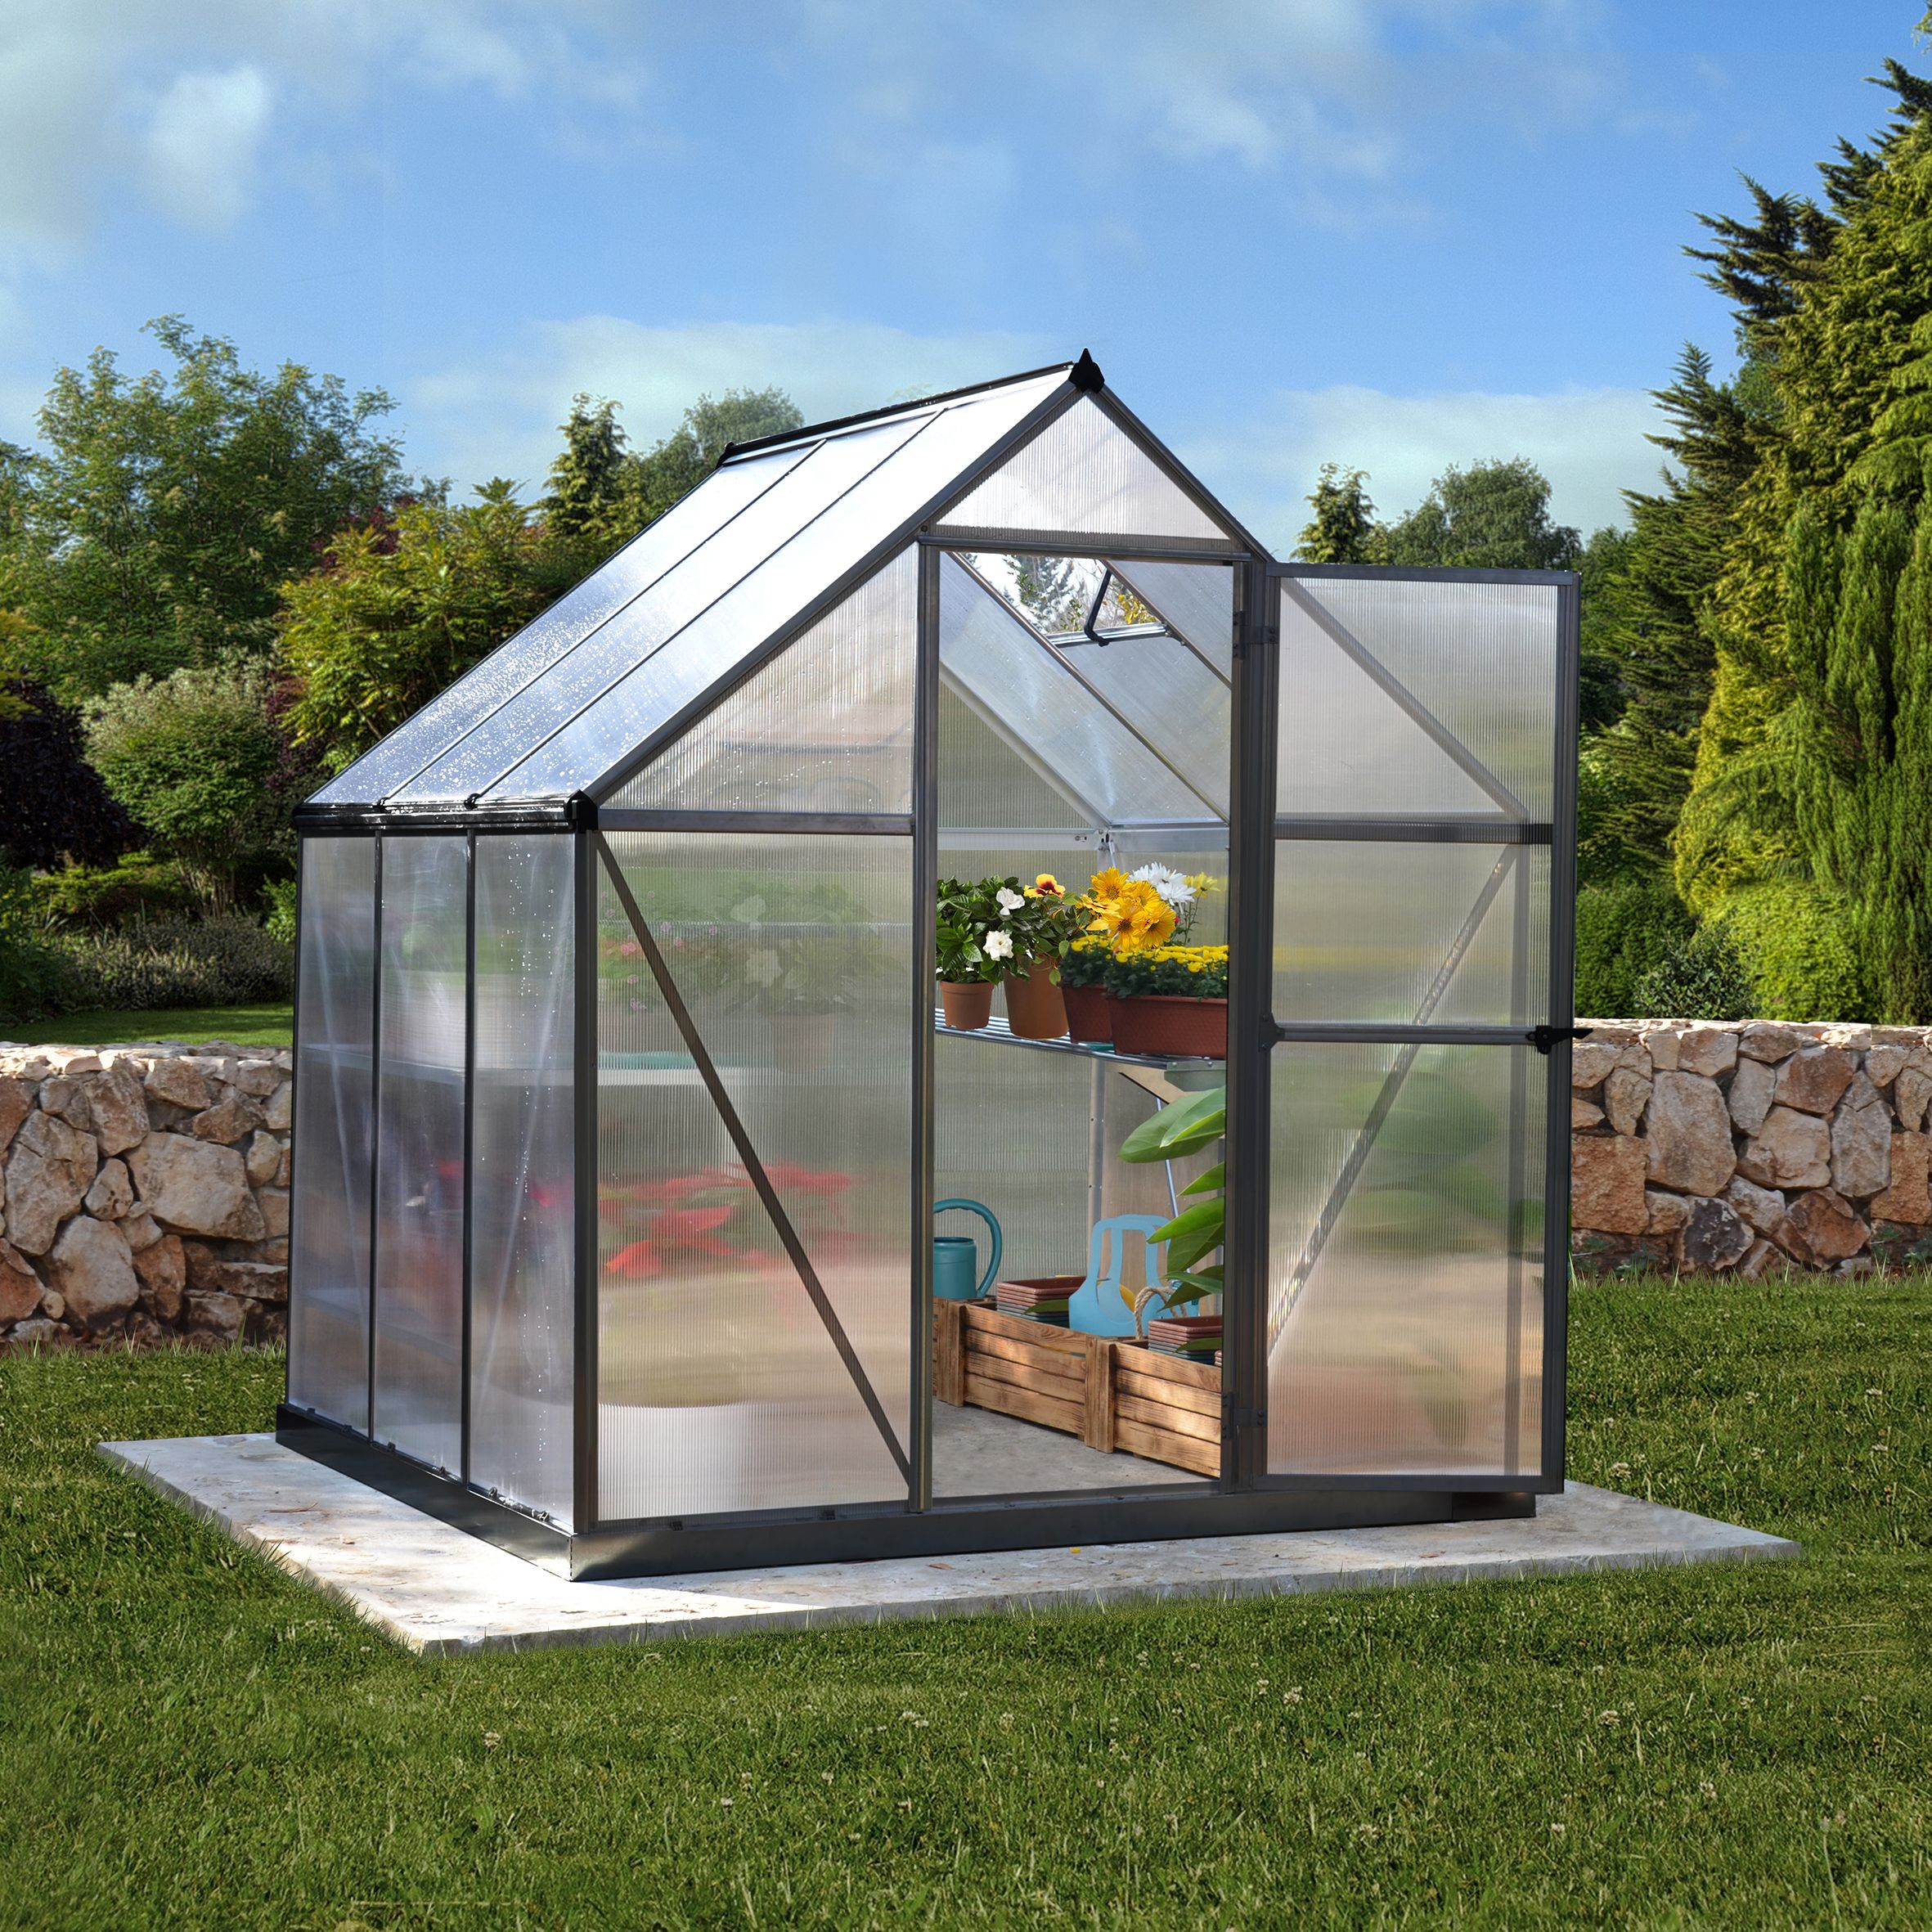 Palram - Canopia Mythos Grey 6X6 Greenhouse with Adjustable vent